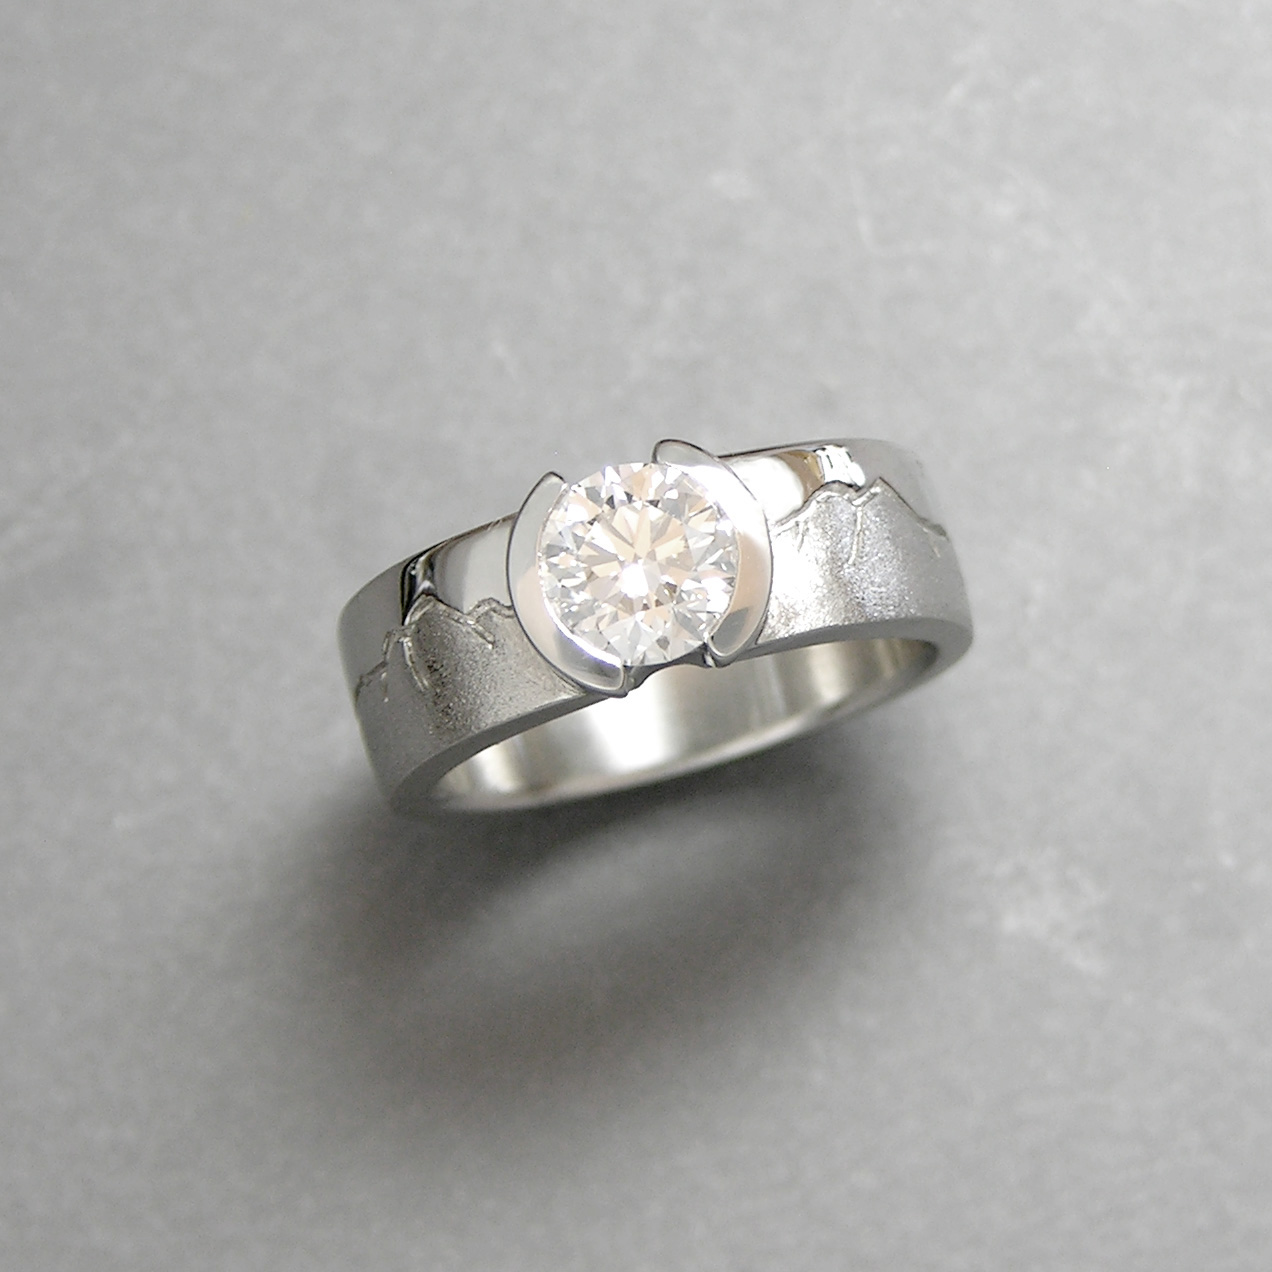 Platinum Aspen Skyline Engagement ring with .90carat Round Brilliant cut Diamond in partial bezel